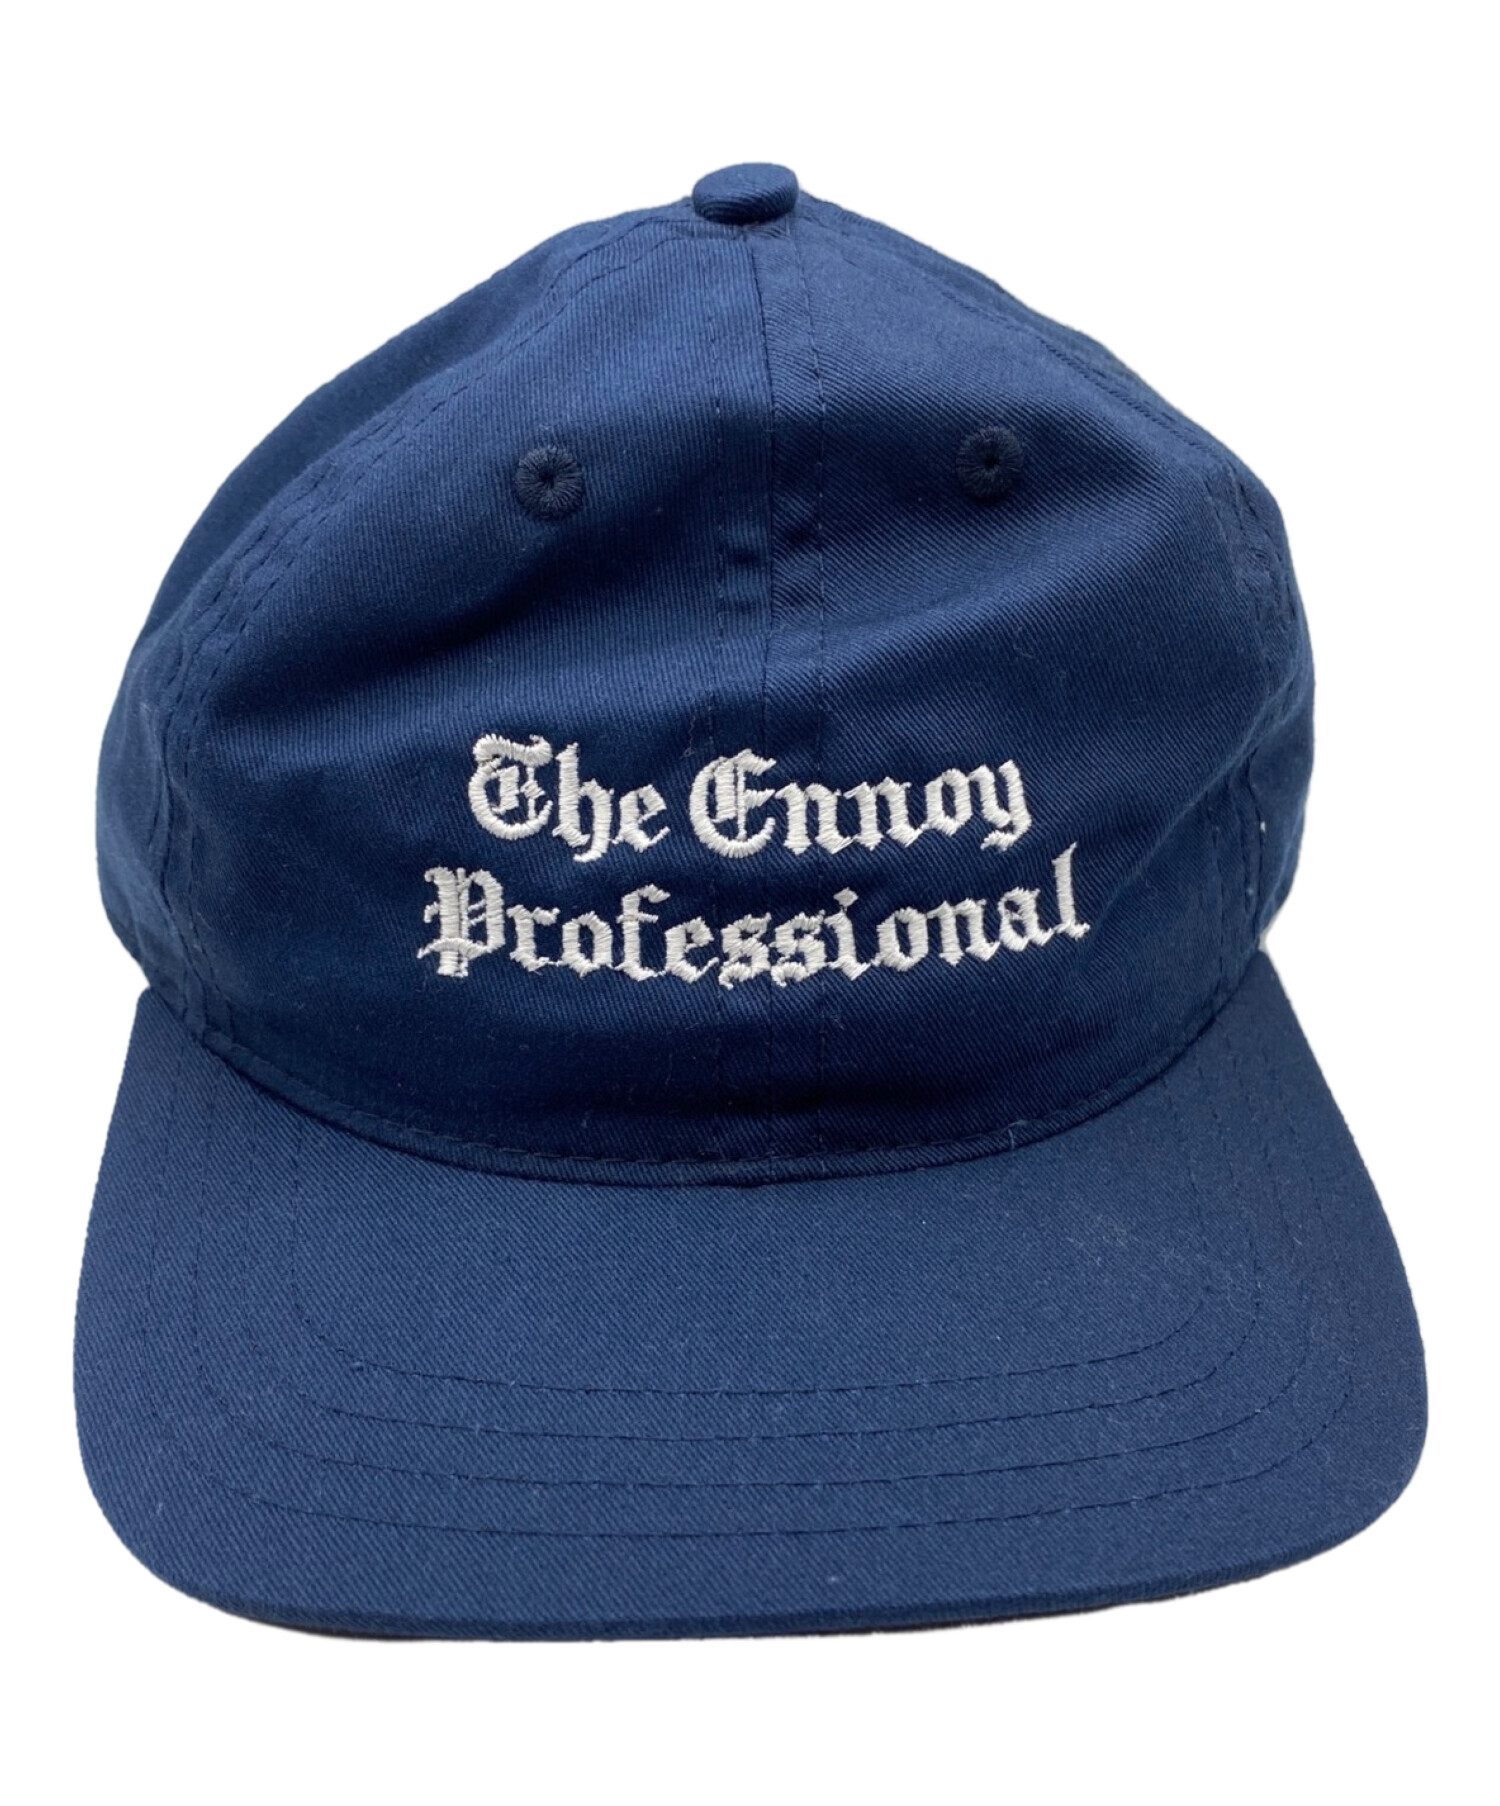 The Ennoy Professional フリースCAP エンノイシャカシャカ - 帽子